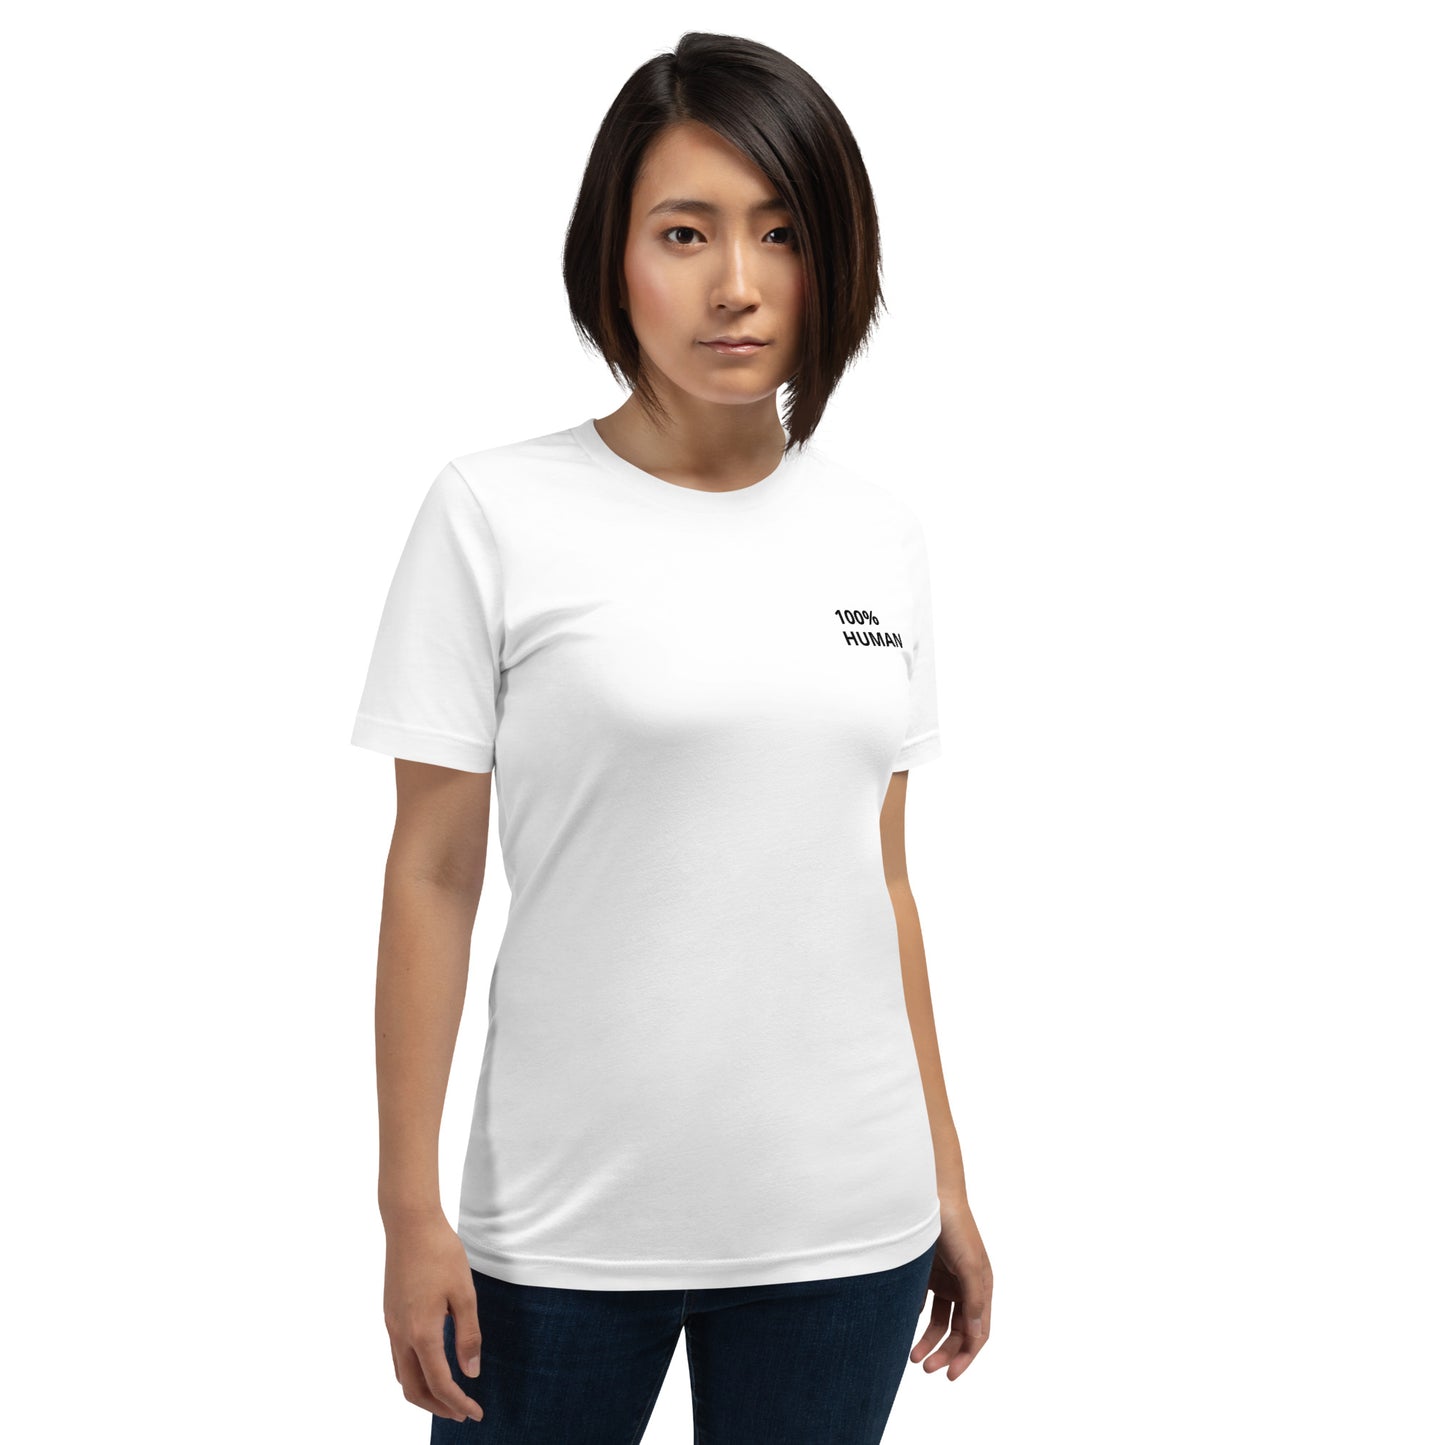 100 % HUMAN Unisex T-Shirt